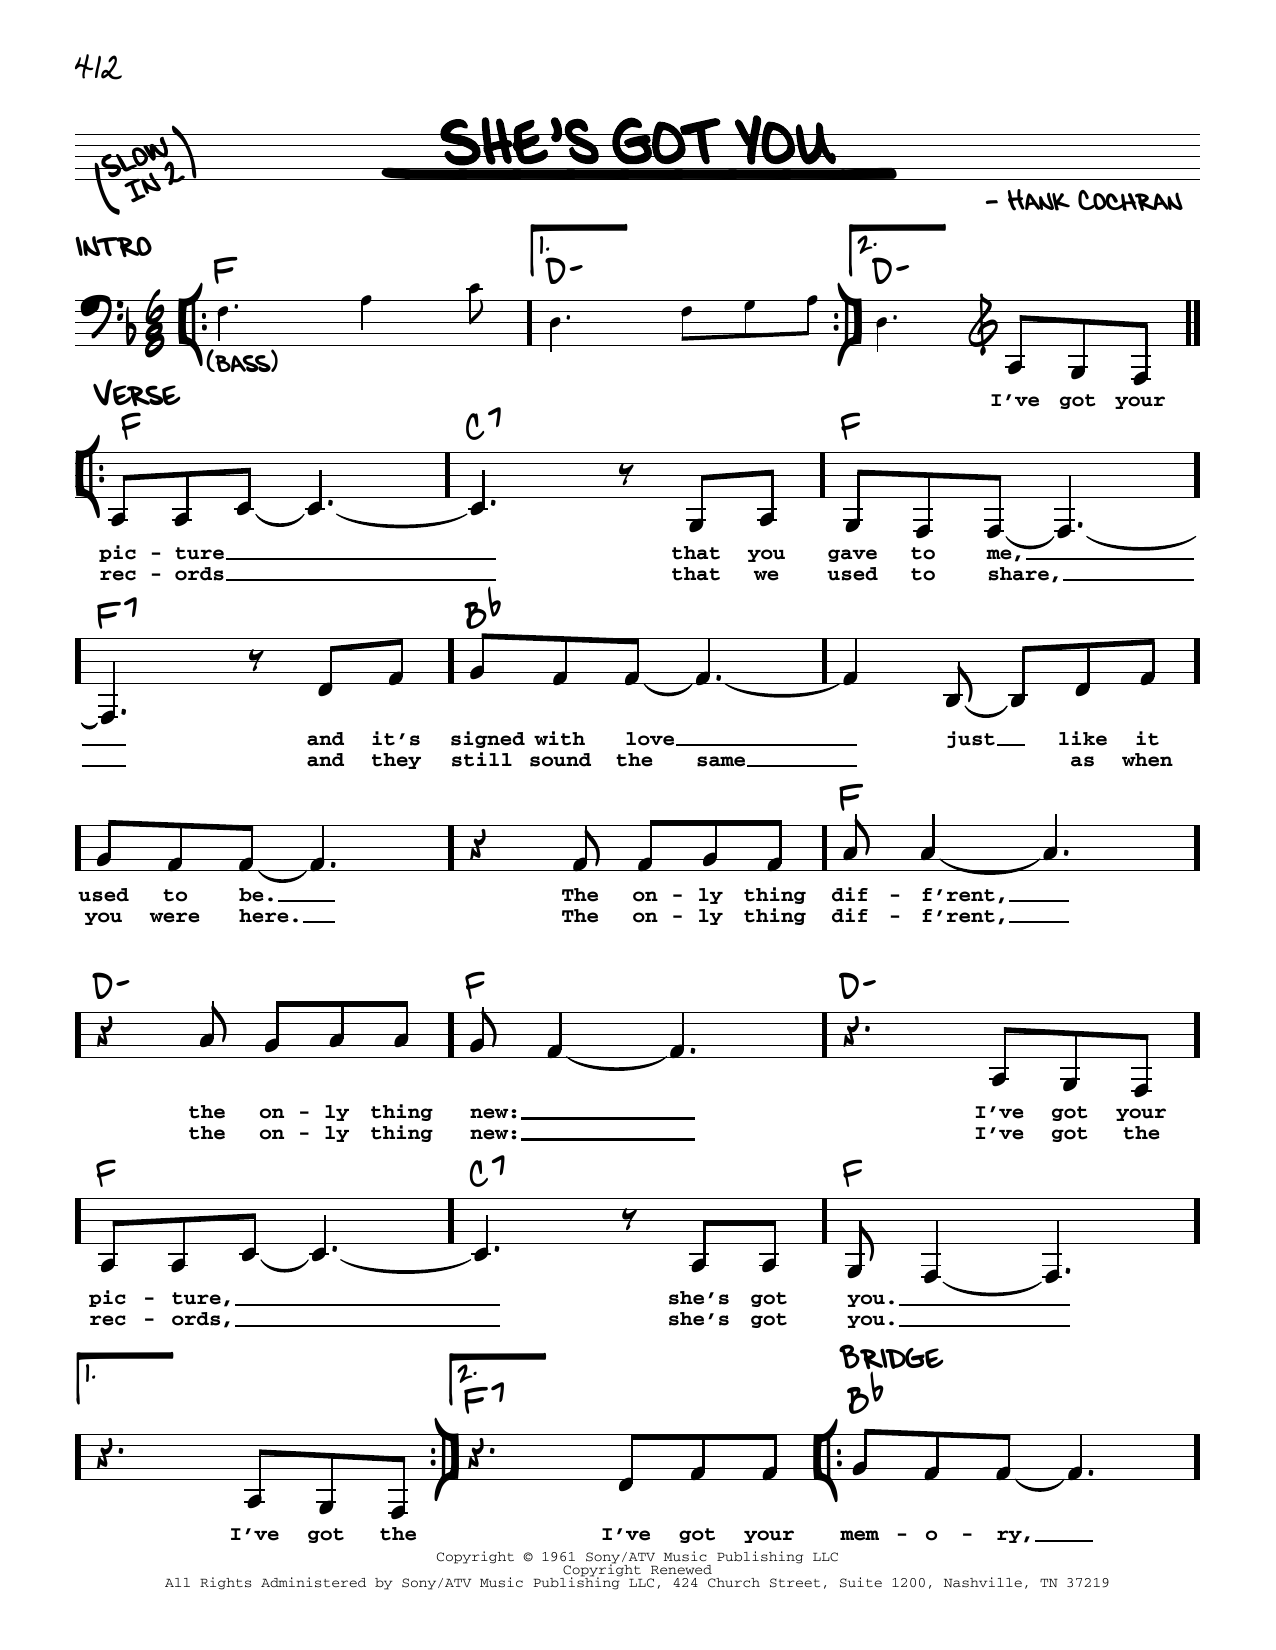 Loretta Lynn She's Got You Sheet Music Notes & Chords for Real Book – Melody, Lyrics & Chords - Download or Print PDF